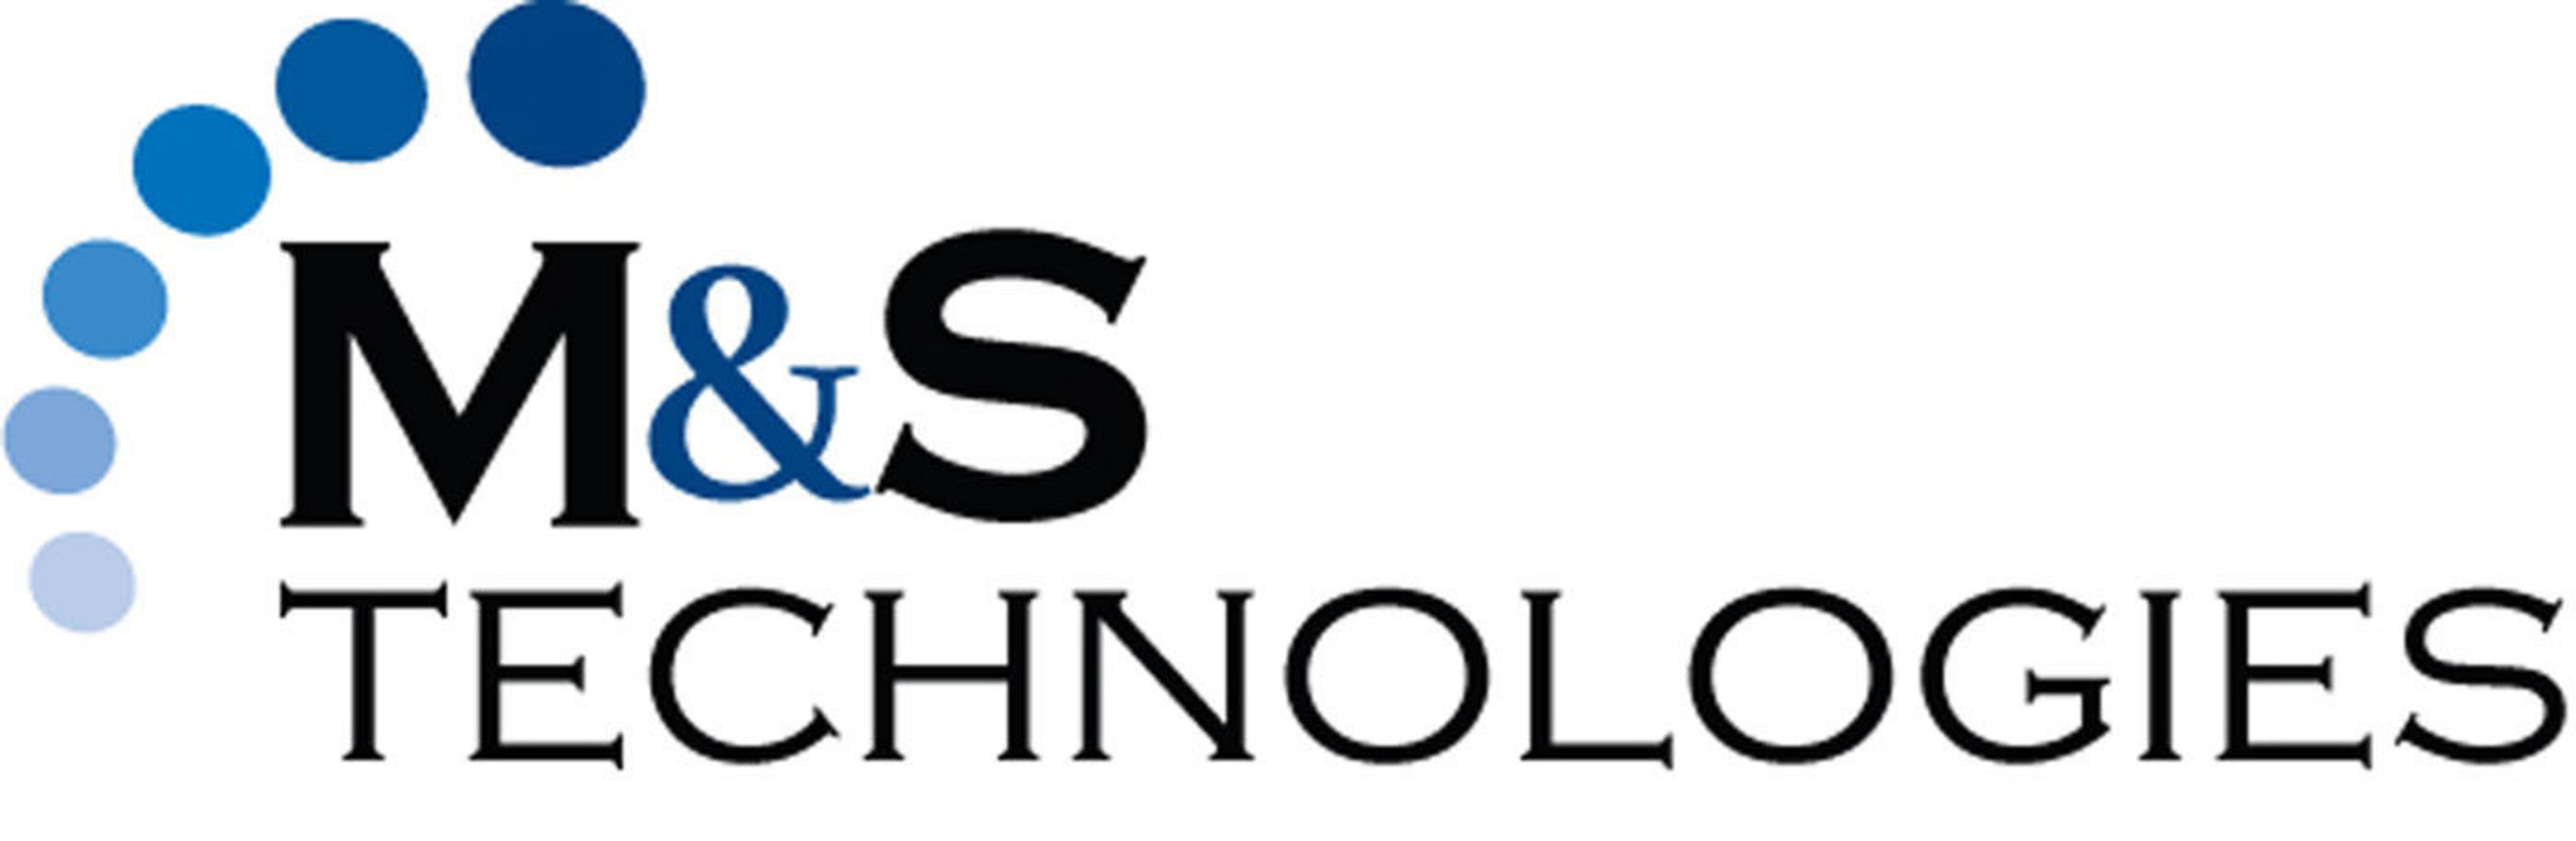 M&S Technologies Logo.